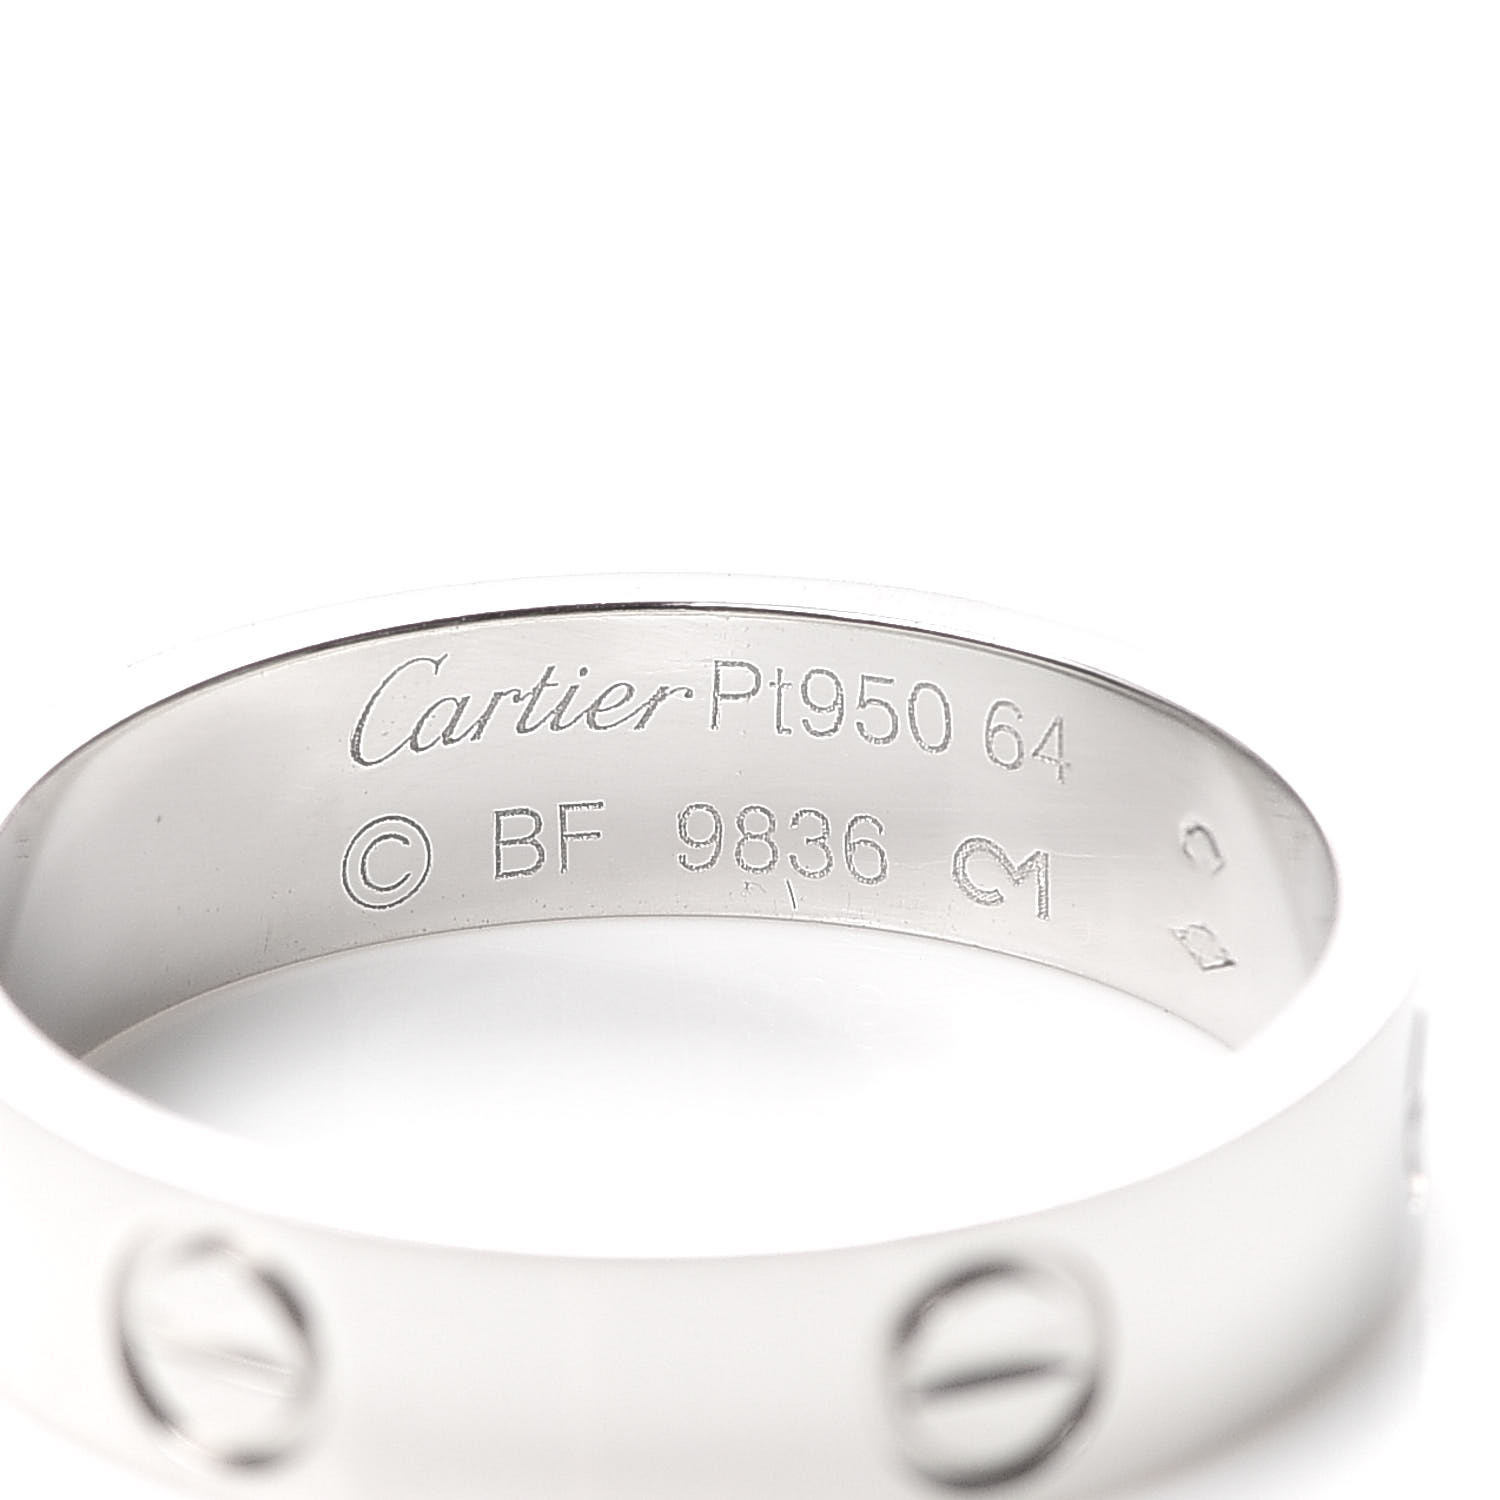 CARTIER Platinum 5.5mm LOVE Ring 64 10.75 712456 FASHIONPHILE